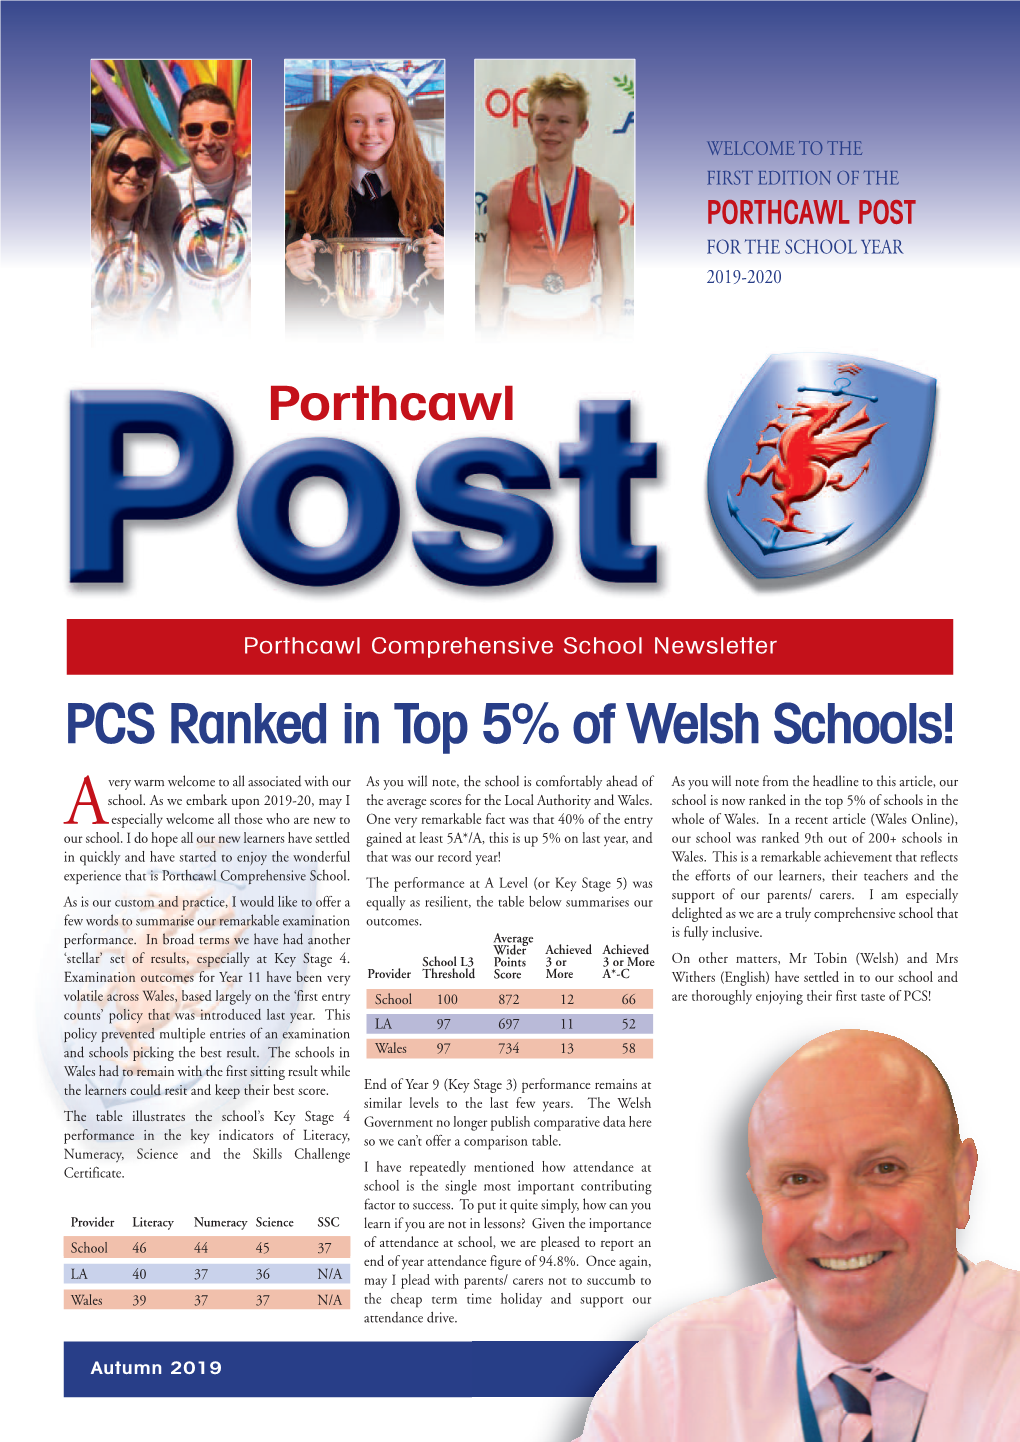 PCS Ranked in Top 5% of Welsh Schools!